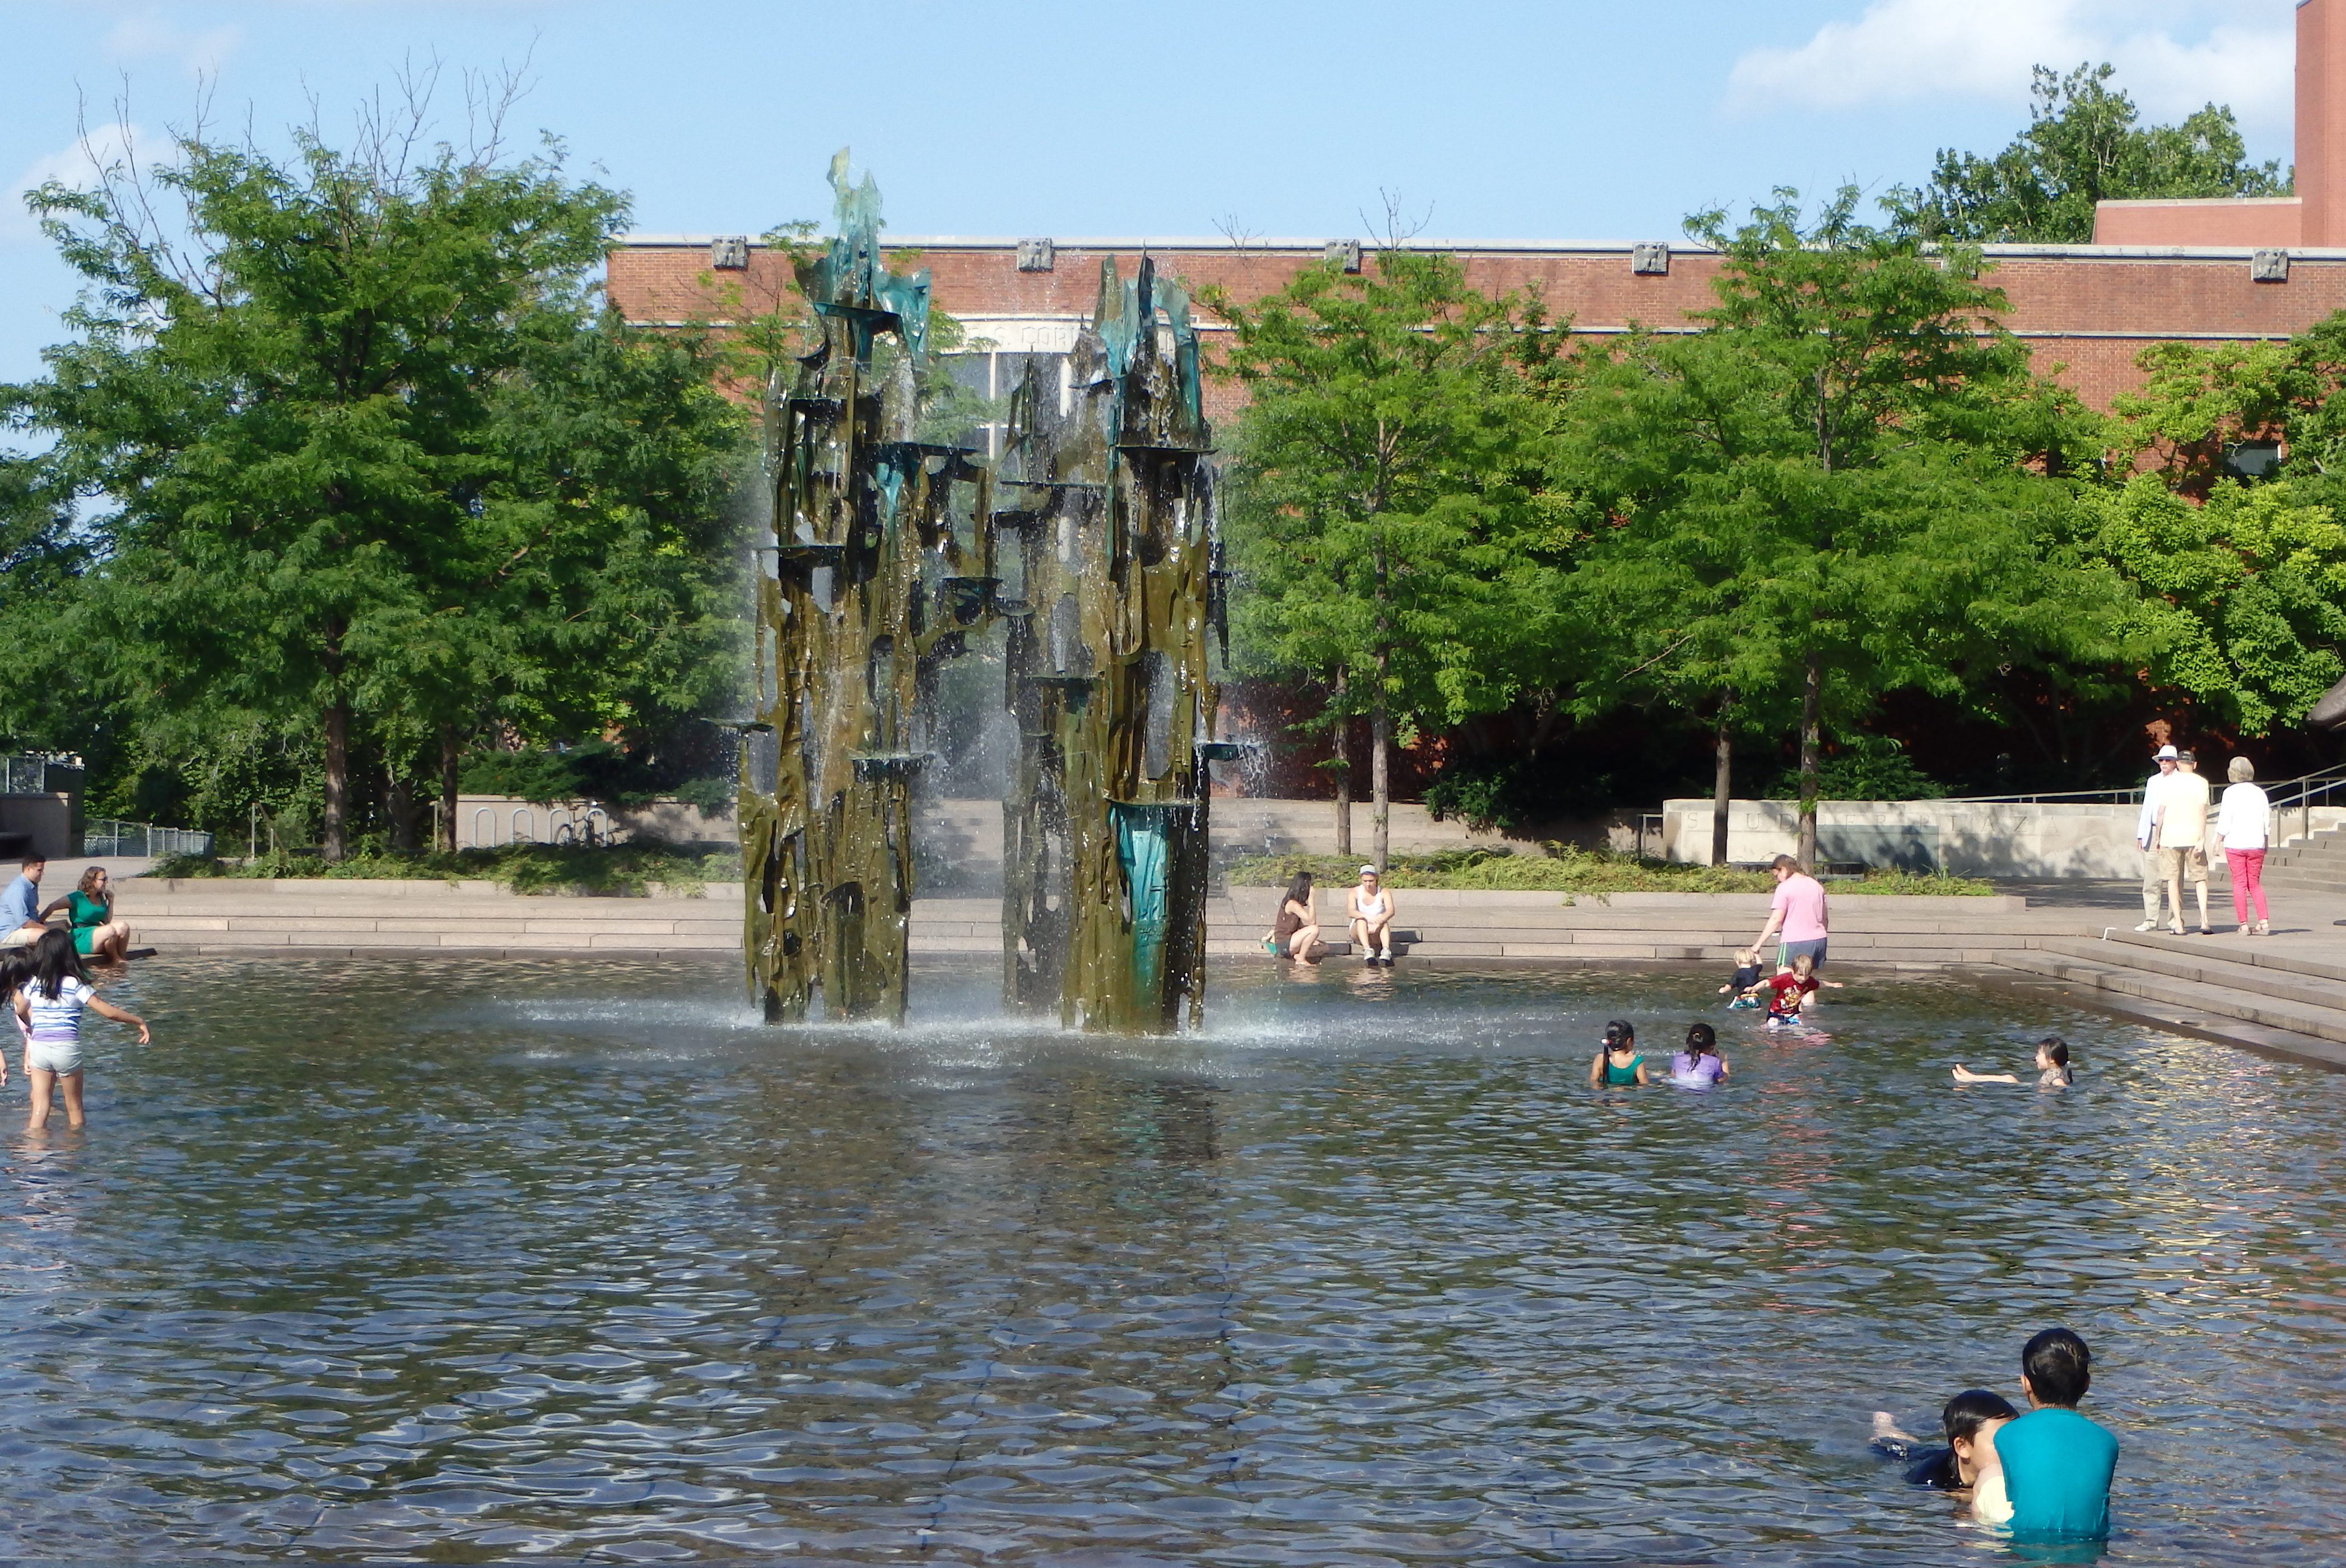 People splashing in a fountain